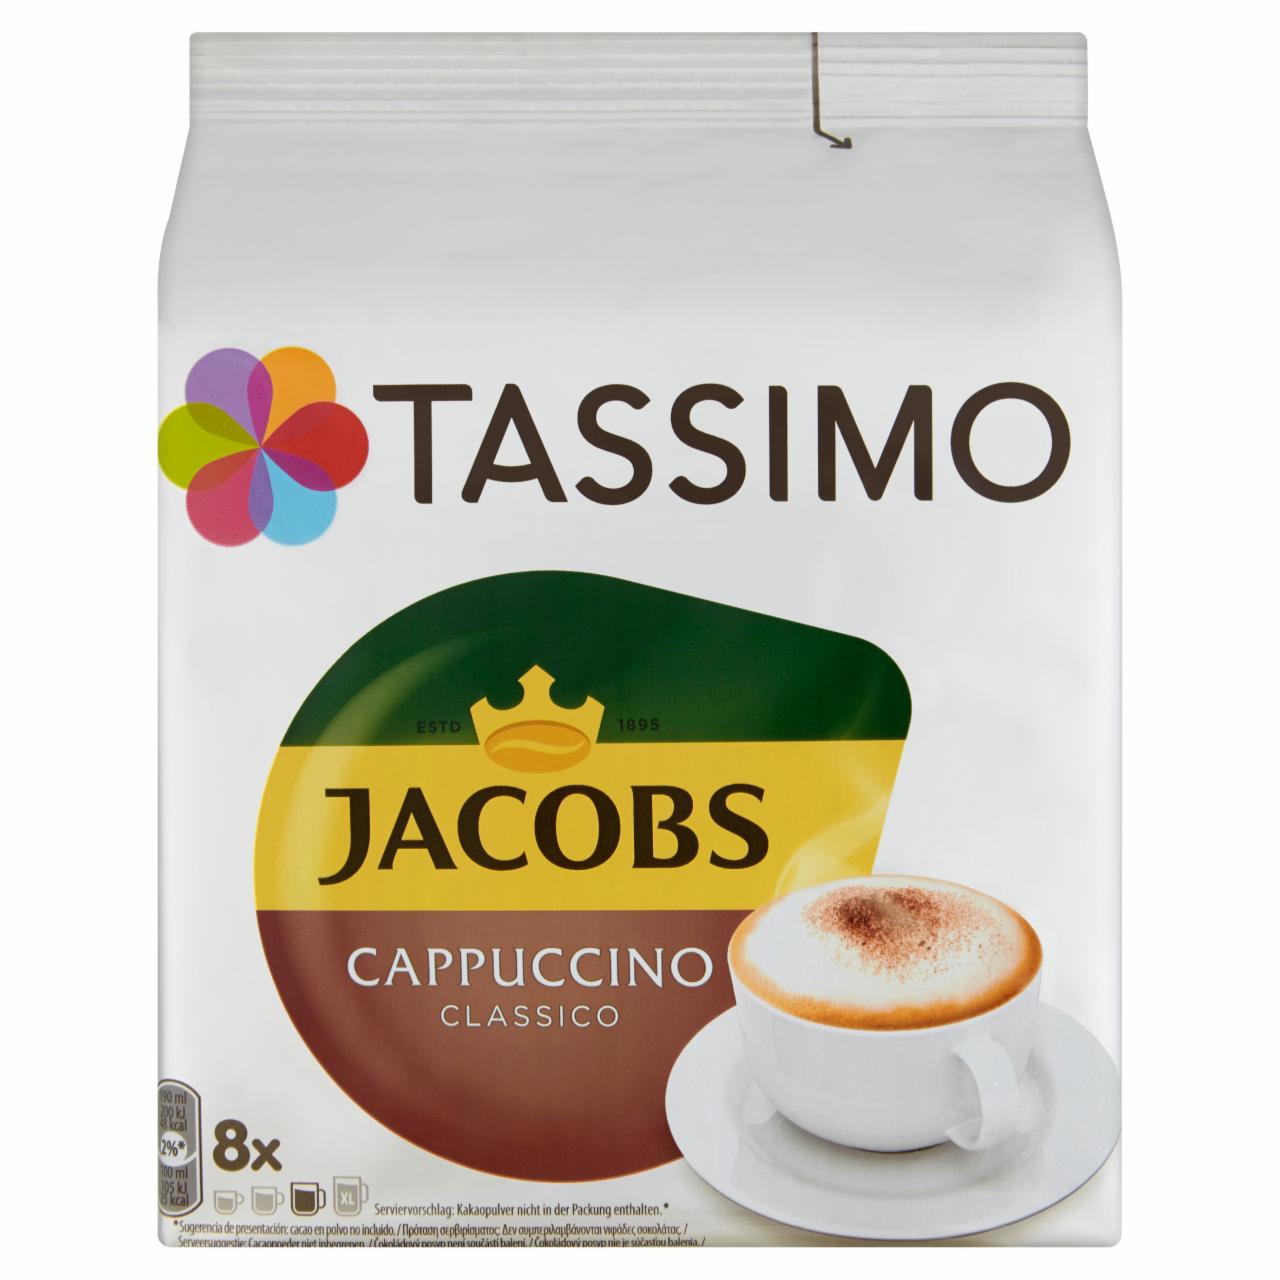 Zdjęcia - Tassimo Jacobs Cappuccino Classico Kawa mielona 8 kapsułek i mleko 8 kapsułek 260 g